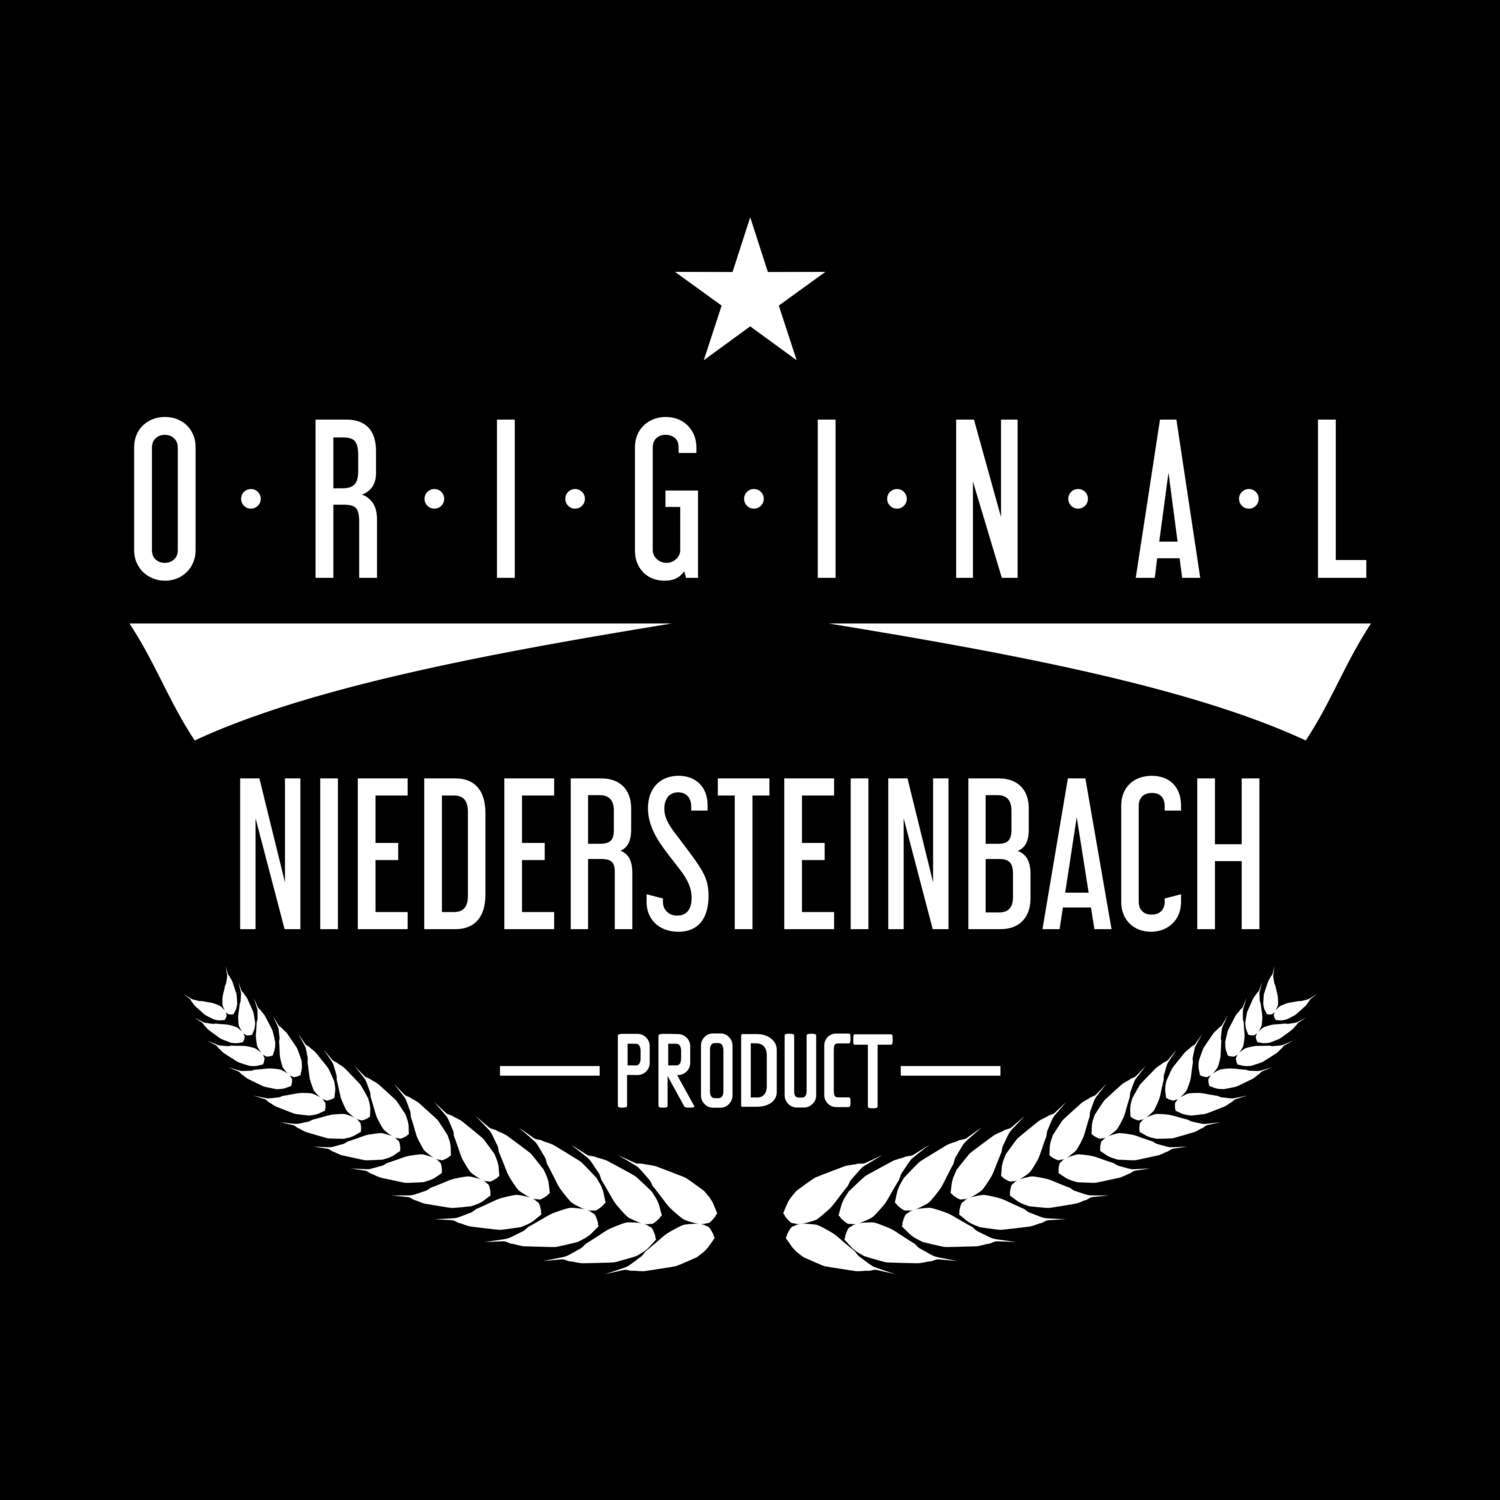 Niedersteinbach T-Shirt »Original Product«